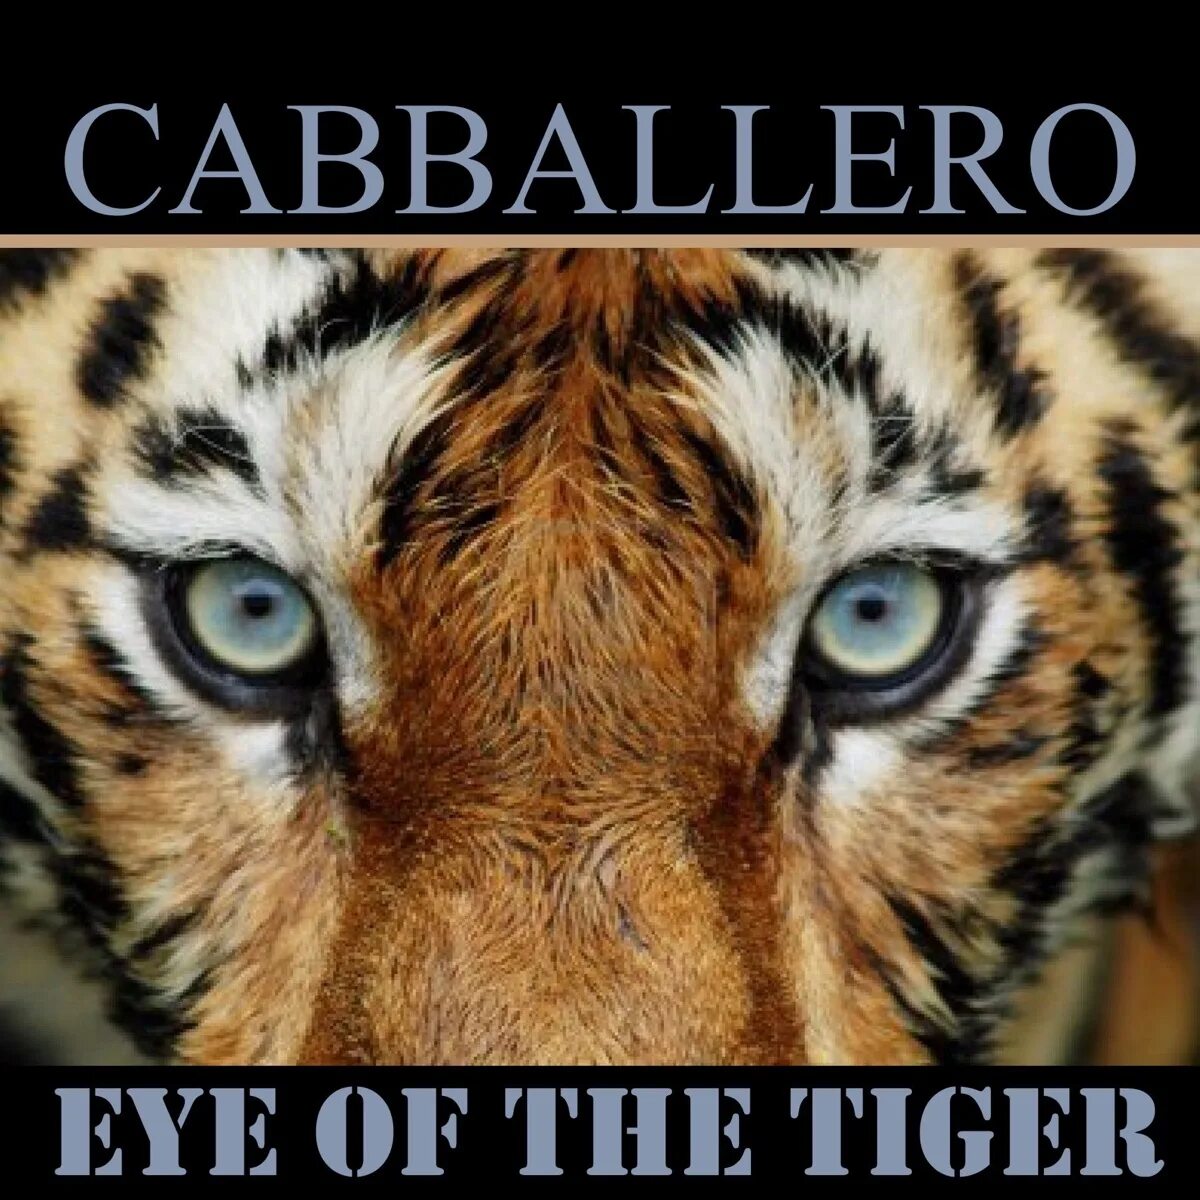 Tiger Eyes. & Tiger альбом. Eye of the Tiger альбом. Eye of the Tiger led Zeppelin альбом. Тайгер слушать